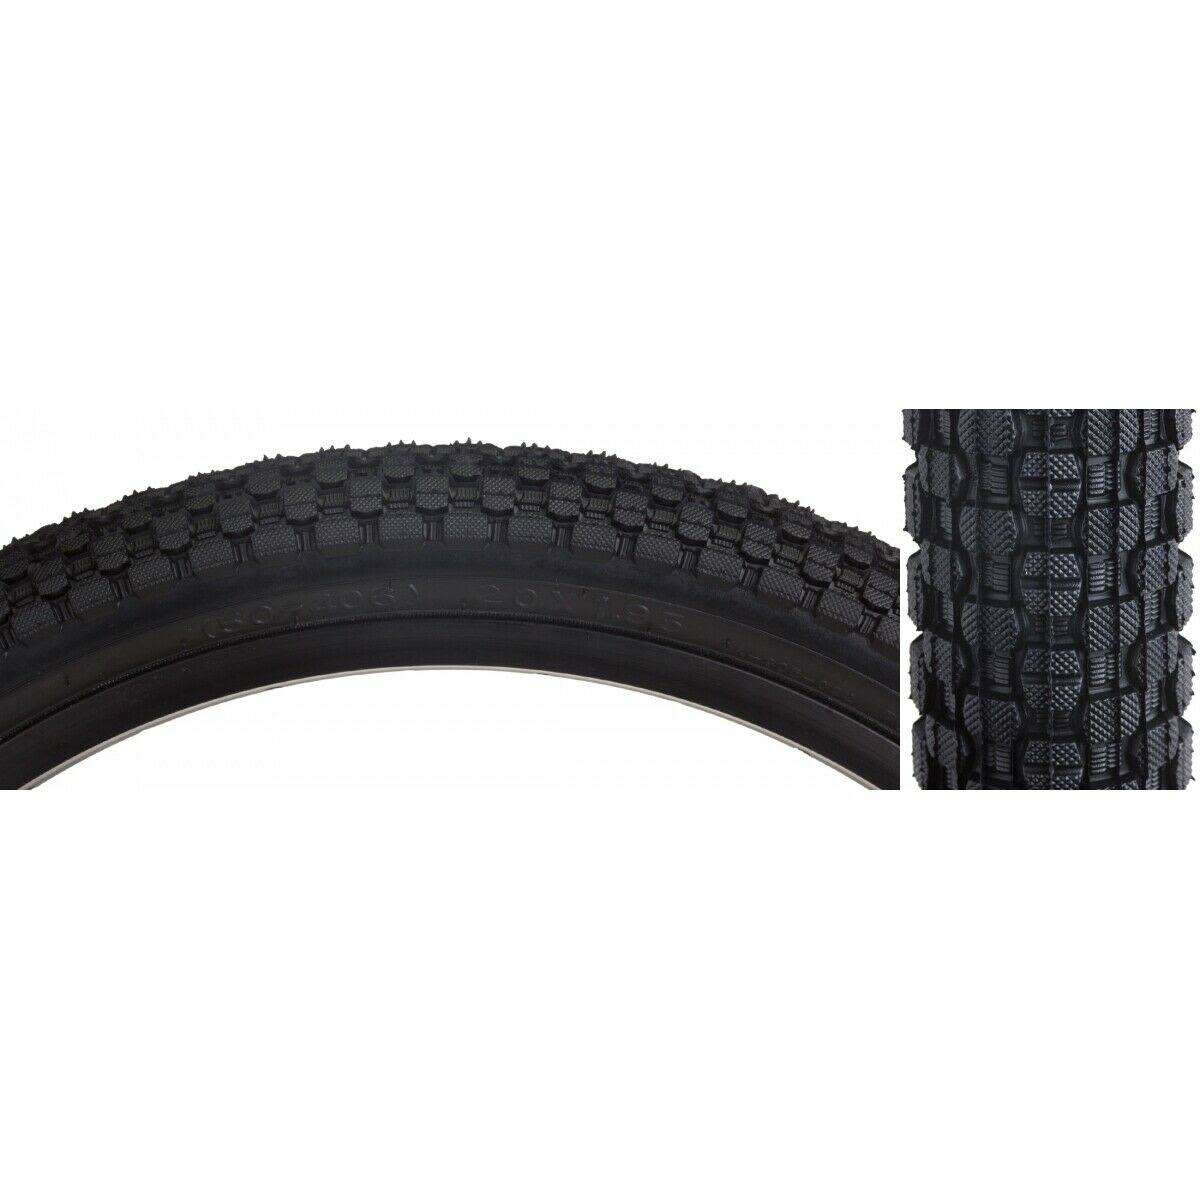 Sunlite Freestlye K-Rad Tire - 20"x1.95", Black